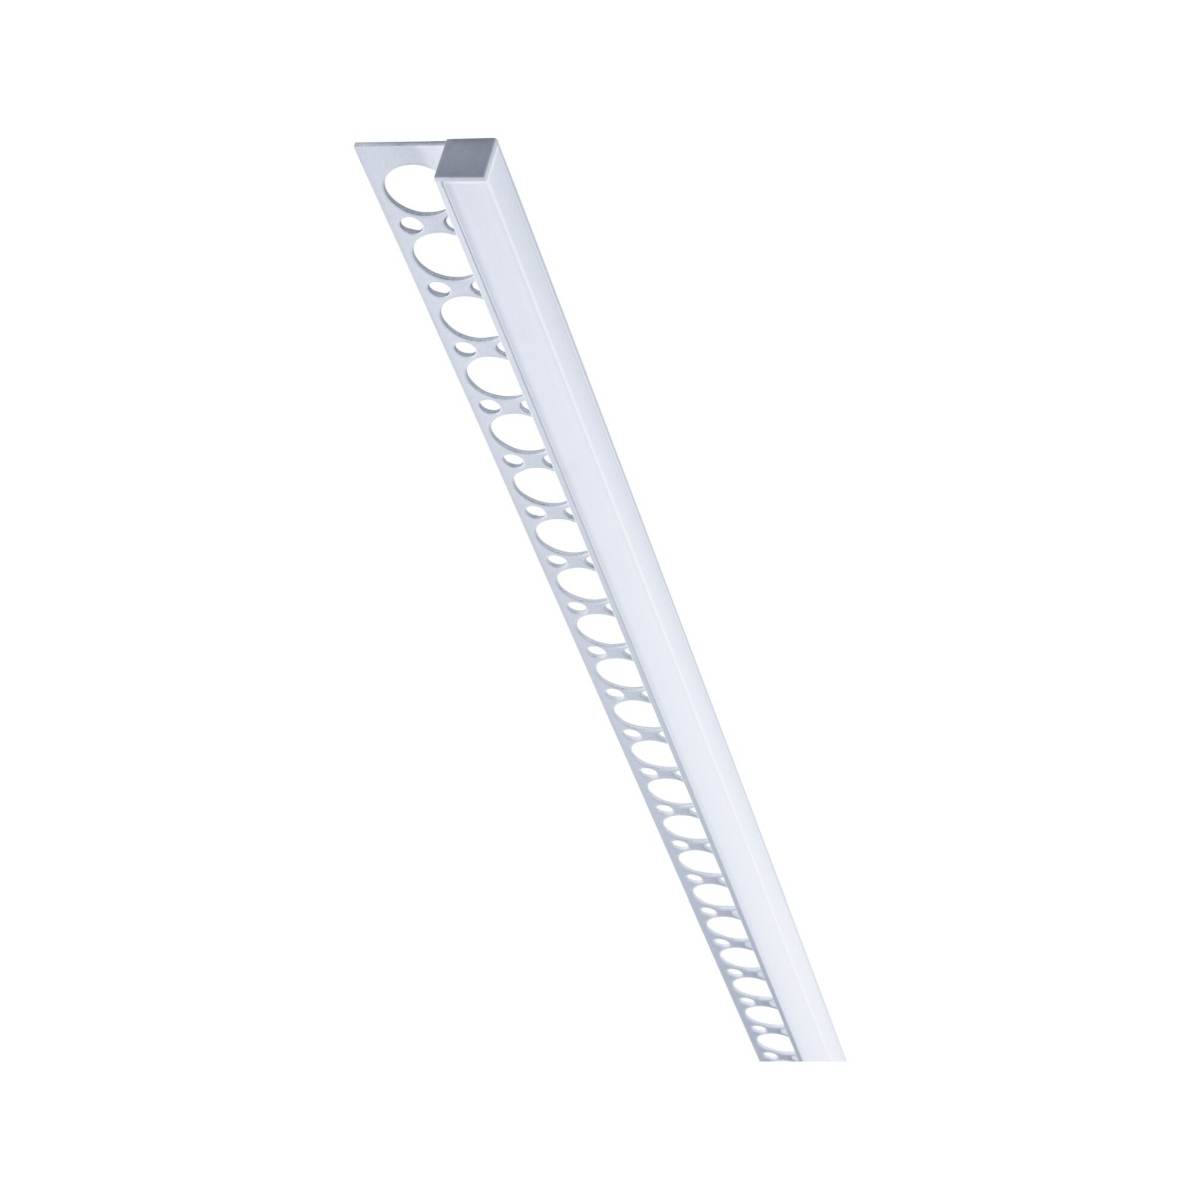 Paulmann LumiTiles Rahmenprofil, m LED oder Aluminium, m, Frame 1 Strip 2 Einbauprofil Profil